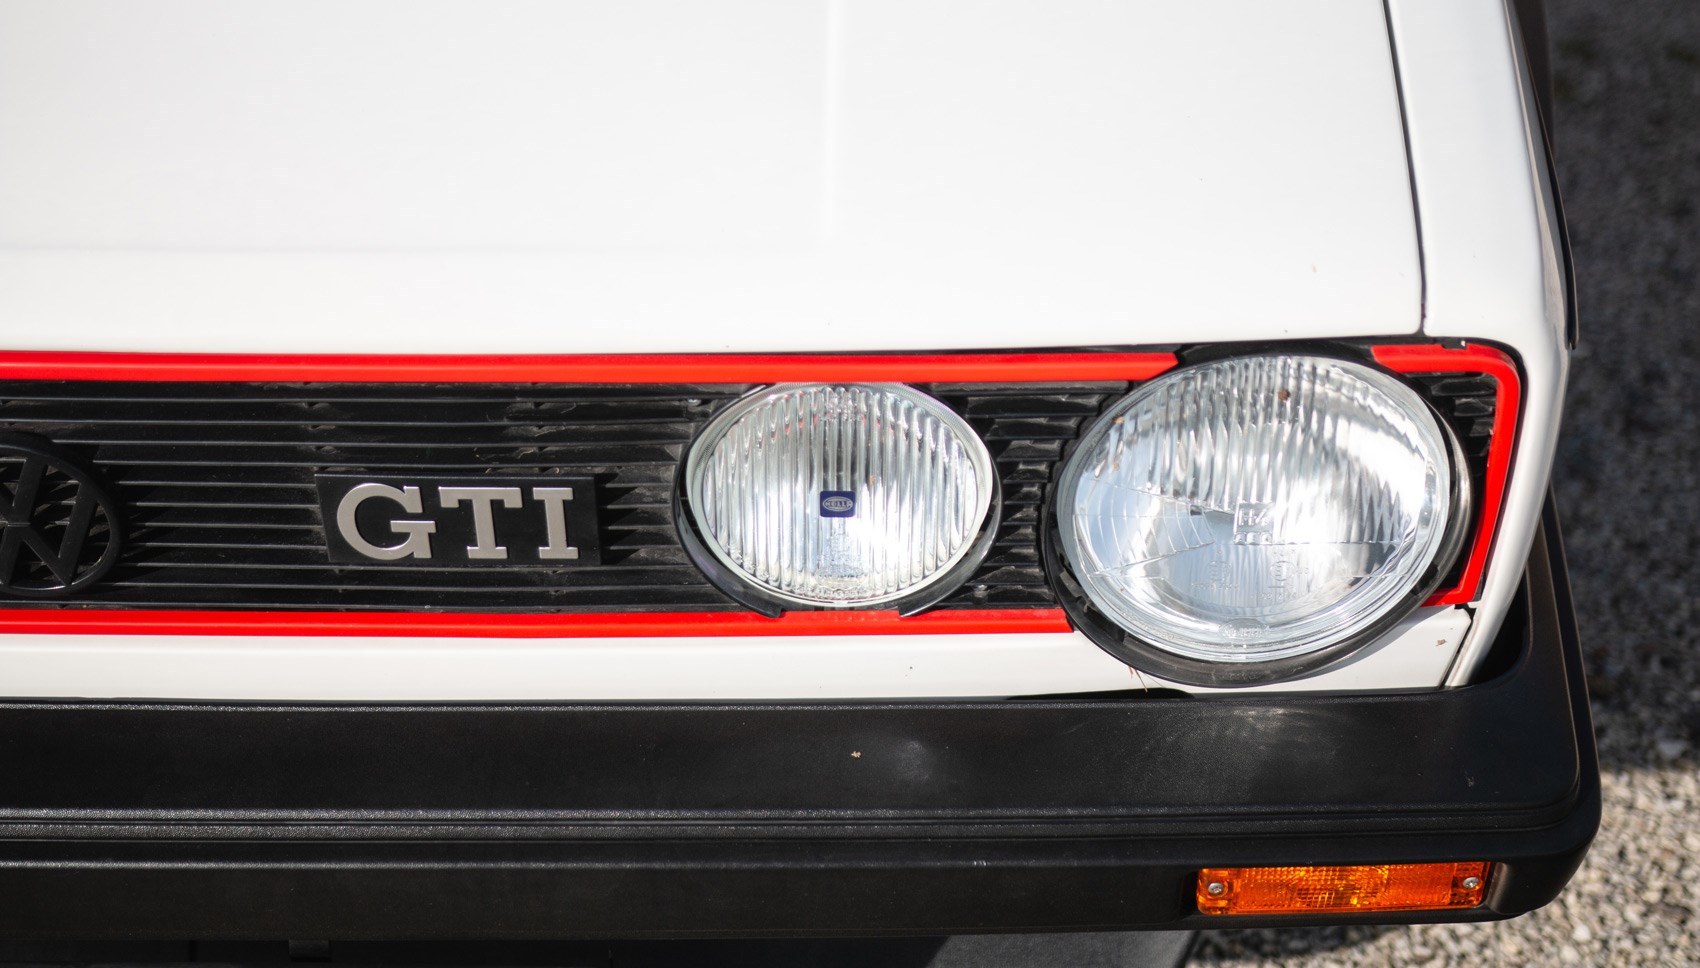 Golf GTI Mk1 nose